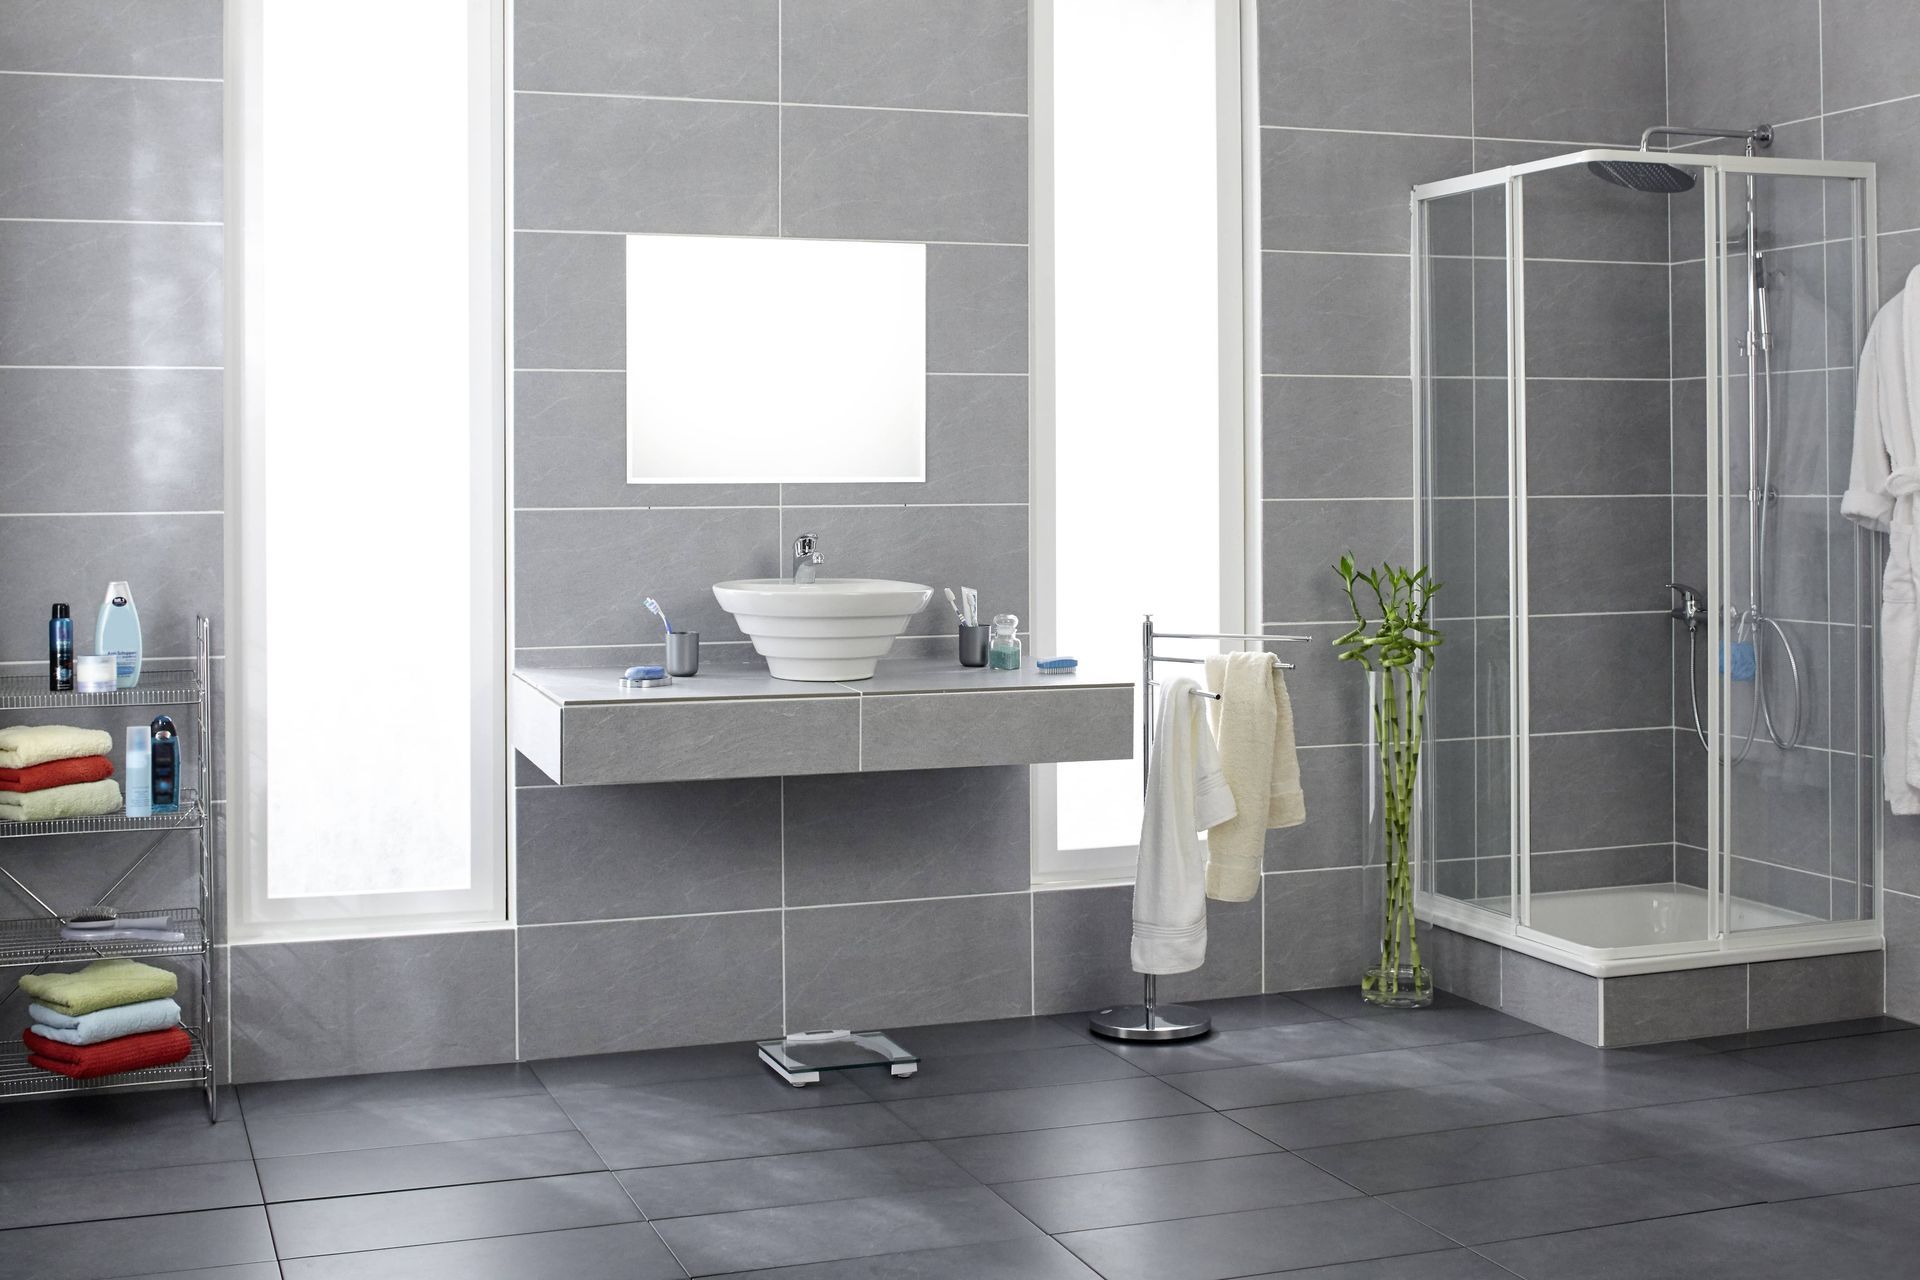 Bathroom With Gray Tiles